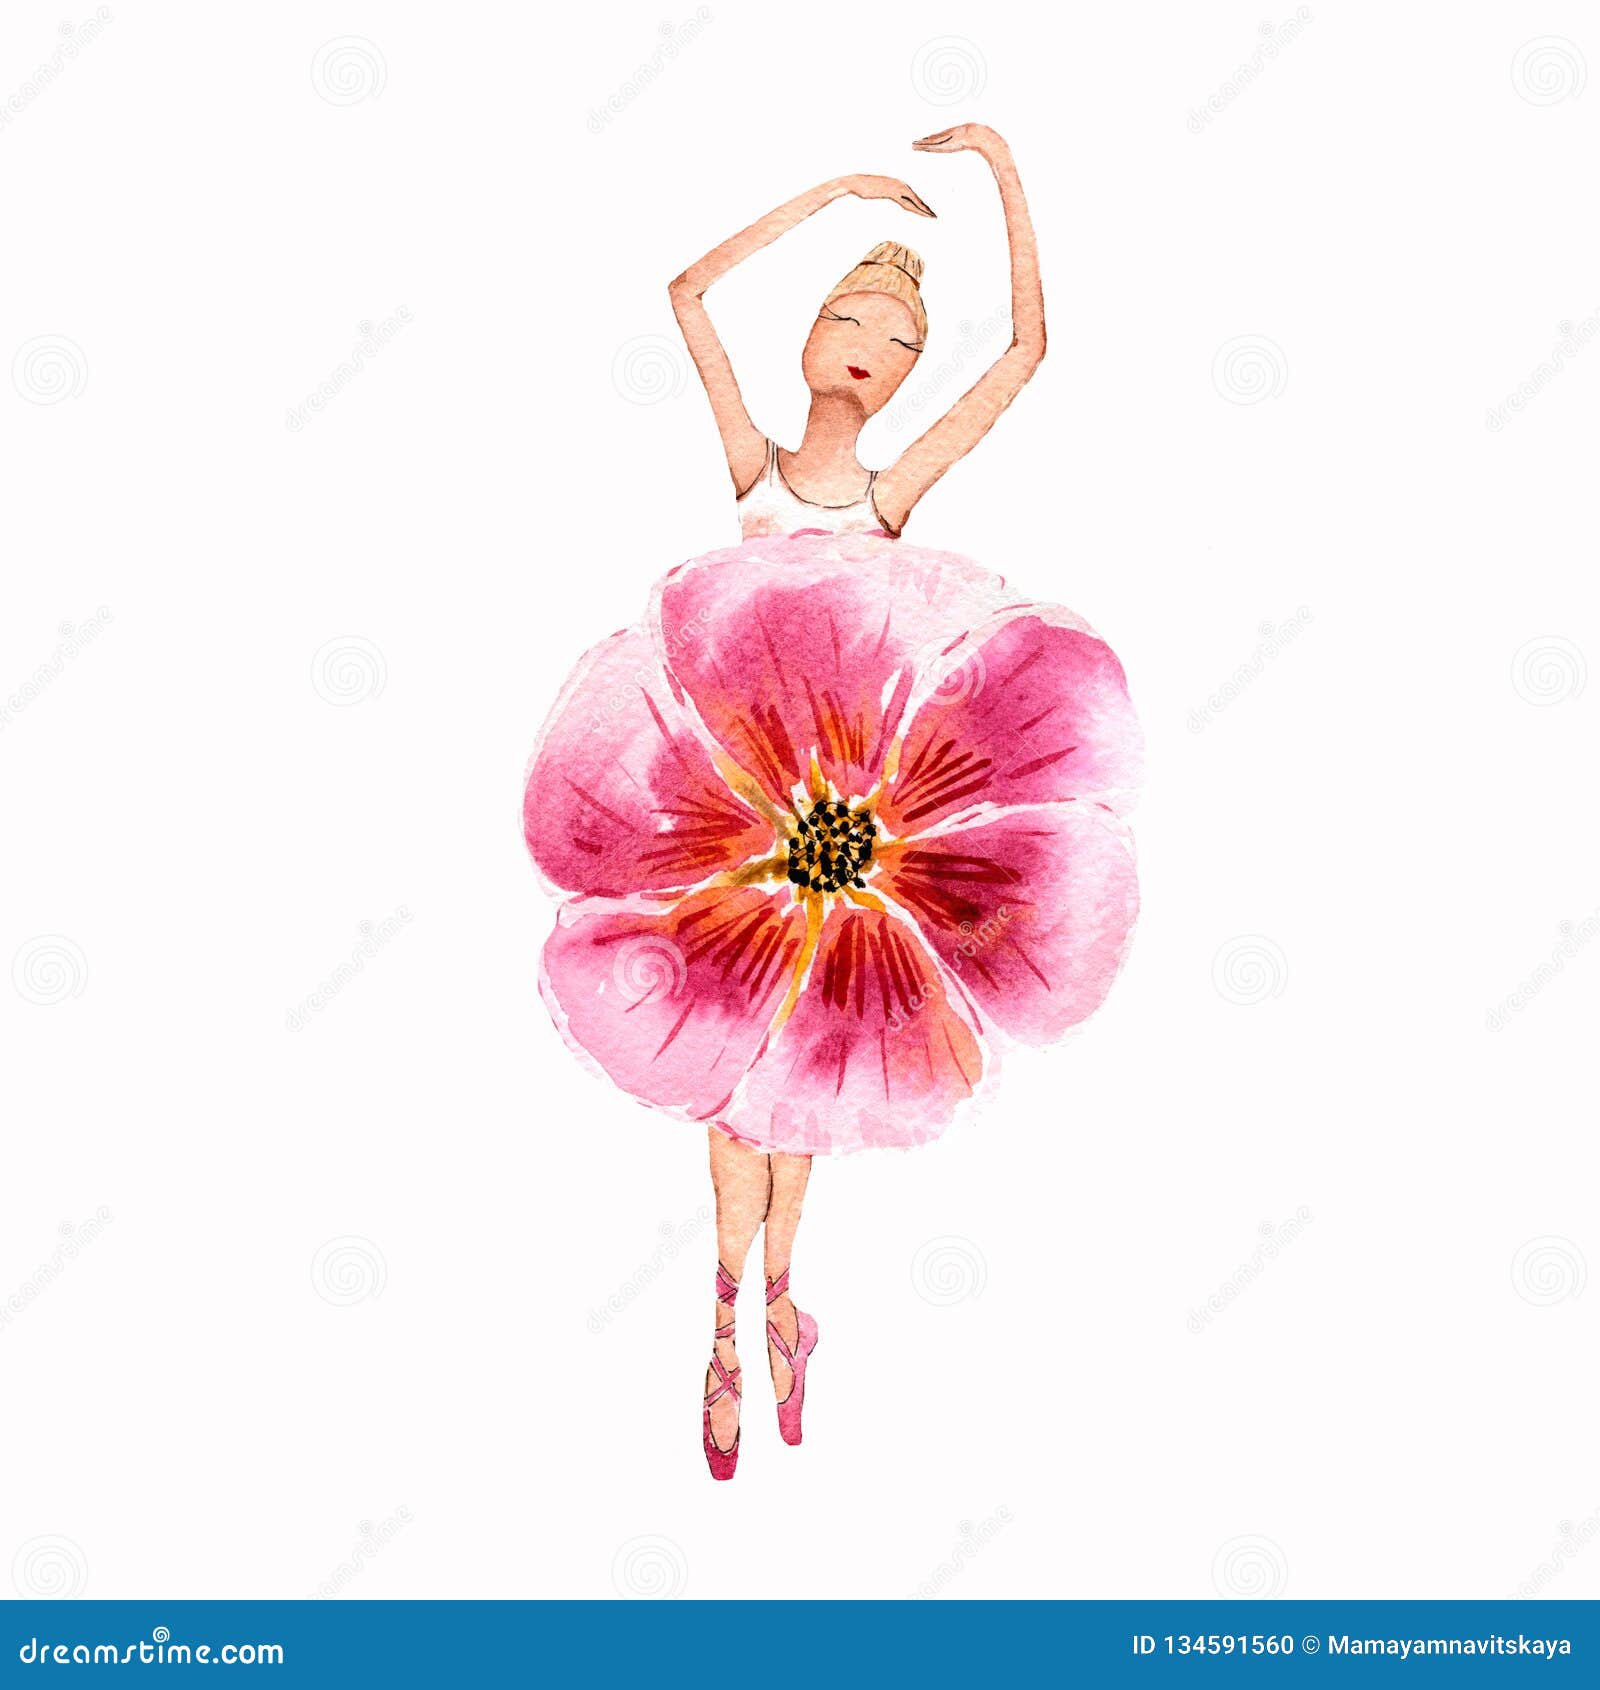 Flower Ballerina Illustrations – 1,684 Flower Ballerina Illustrations, Vectors & Clipart - Dreamstime